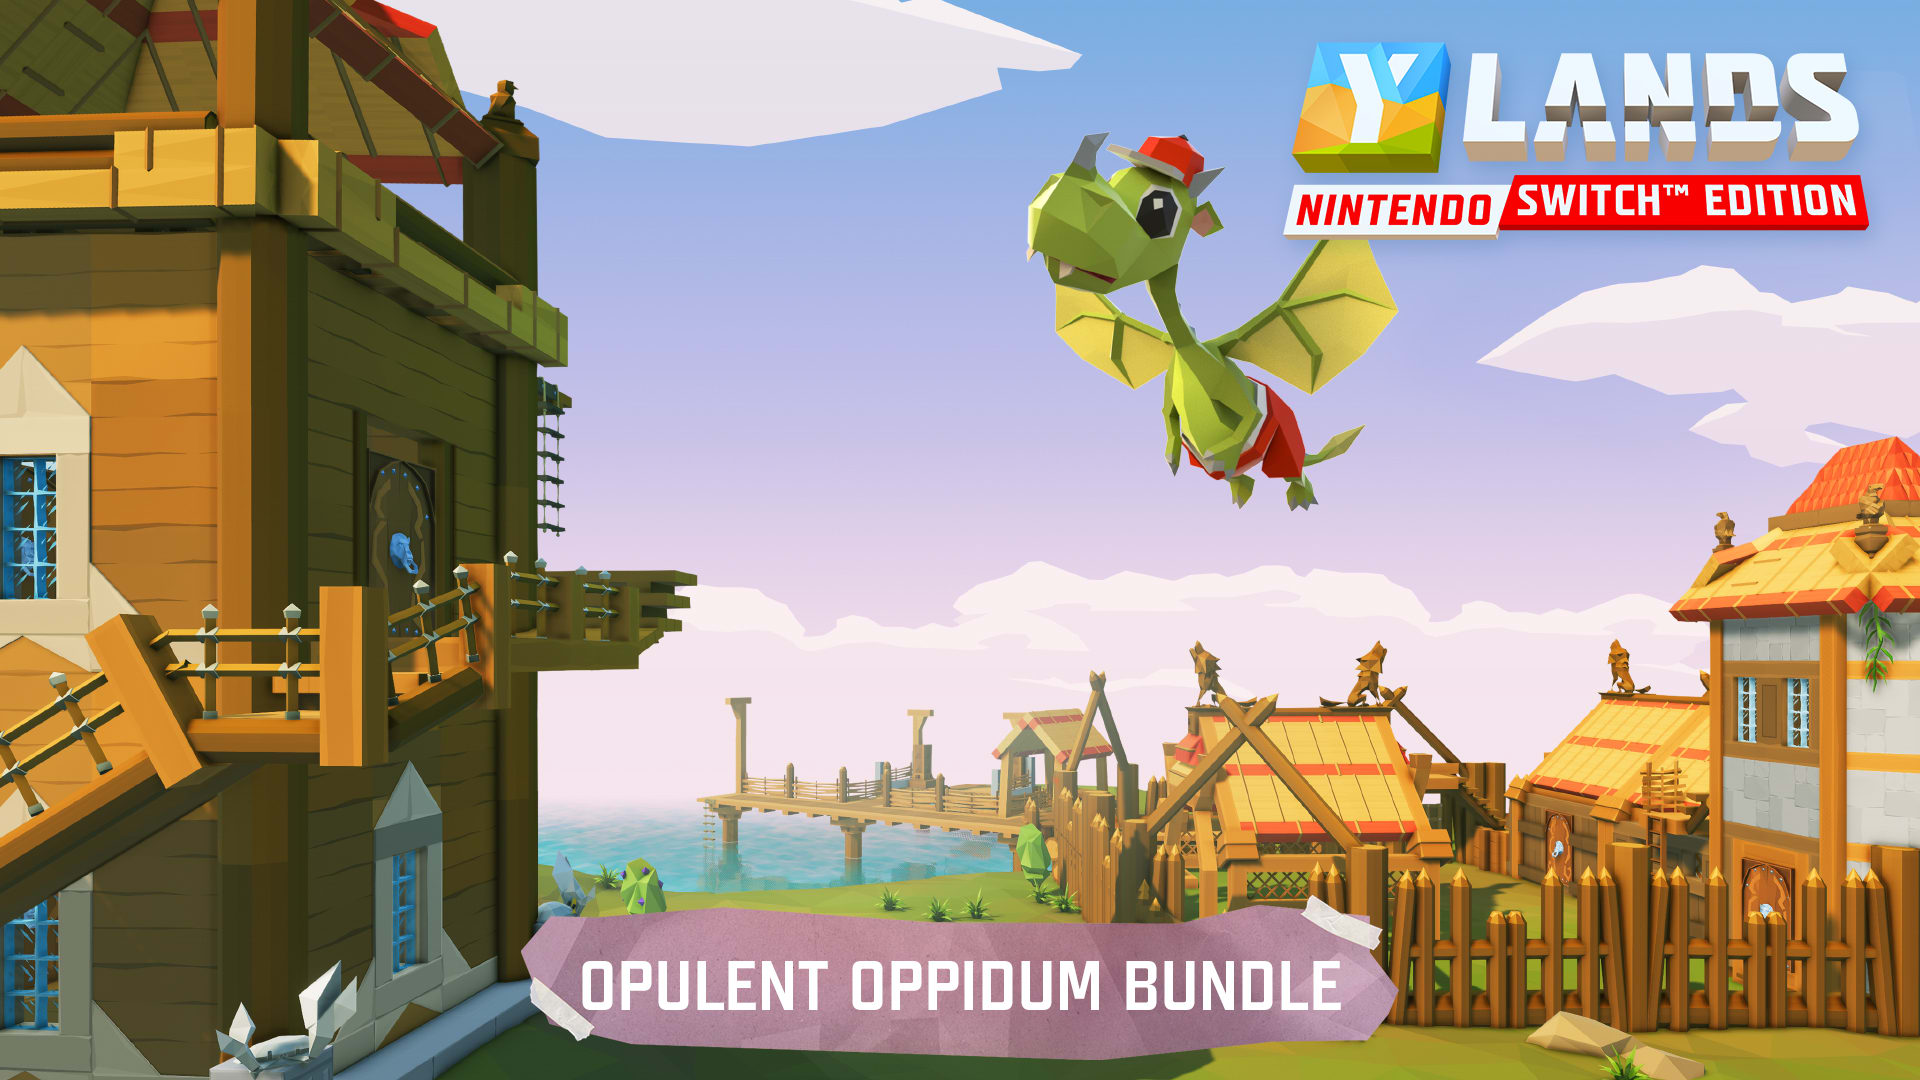 Ylands Nintendo Switch™ Edition - Opulent Oppidum Bundle